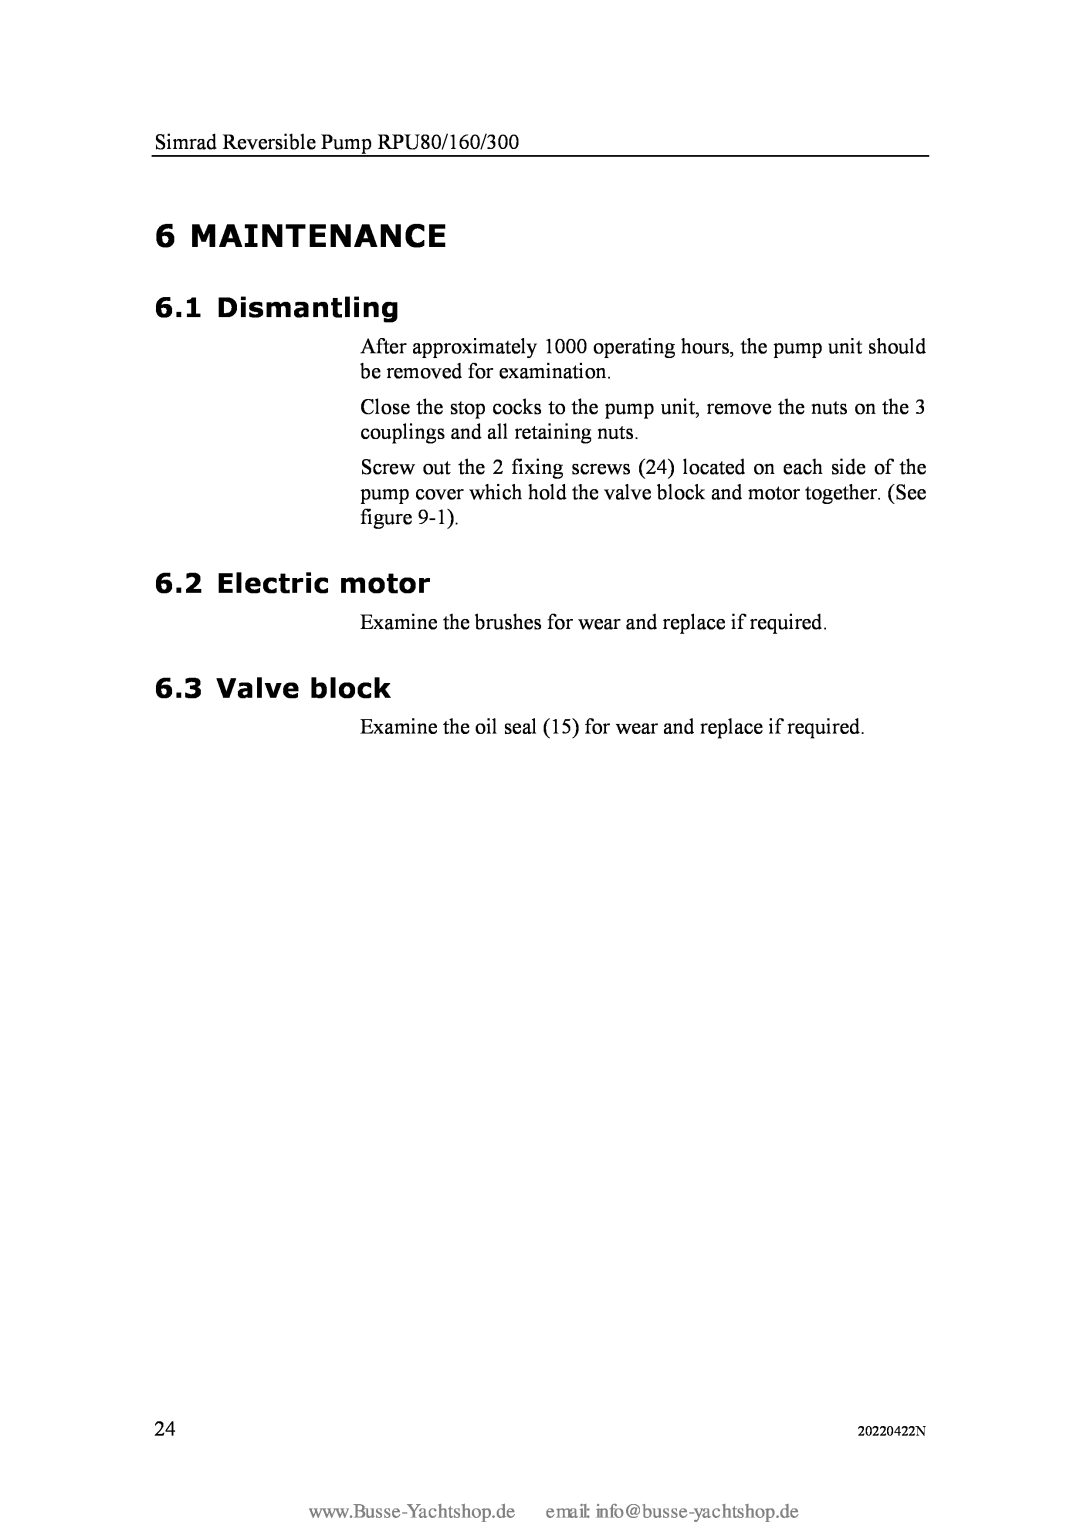 Simran RPU80 instruction manual Maintenance, Dismantling, Electric motor, Valve block 